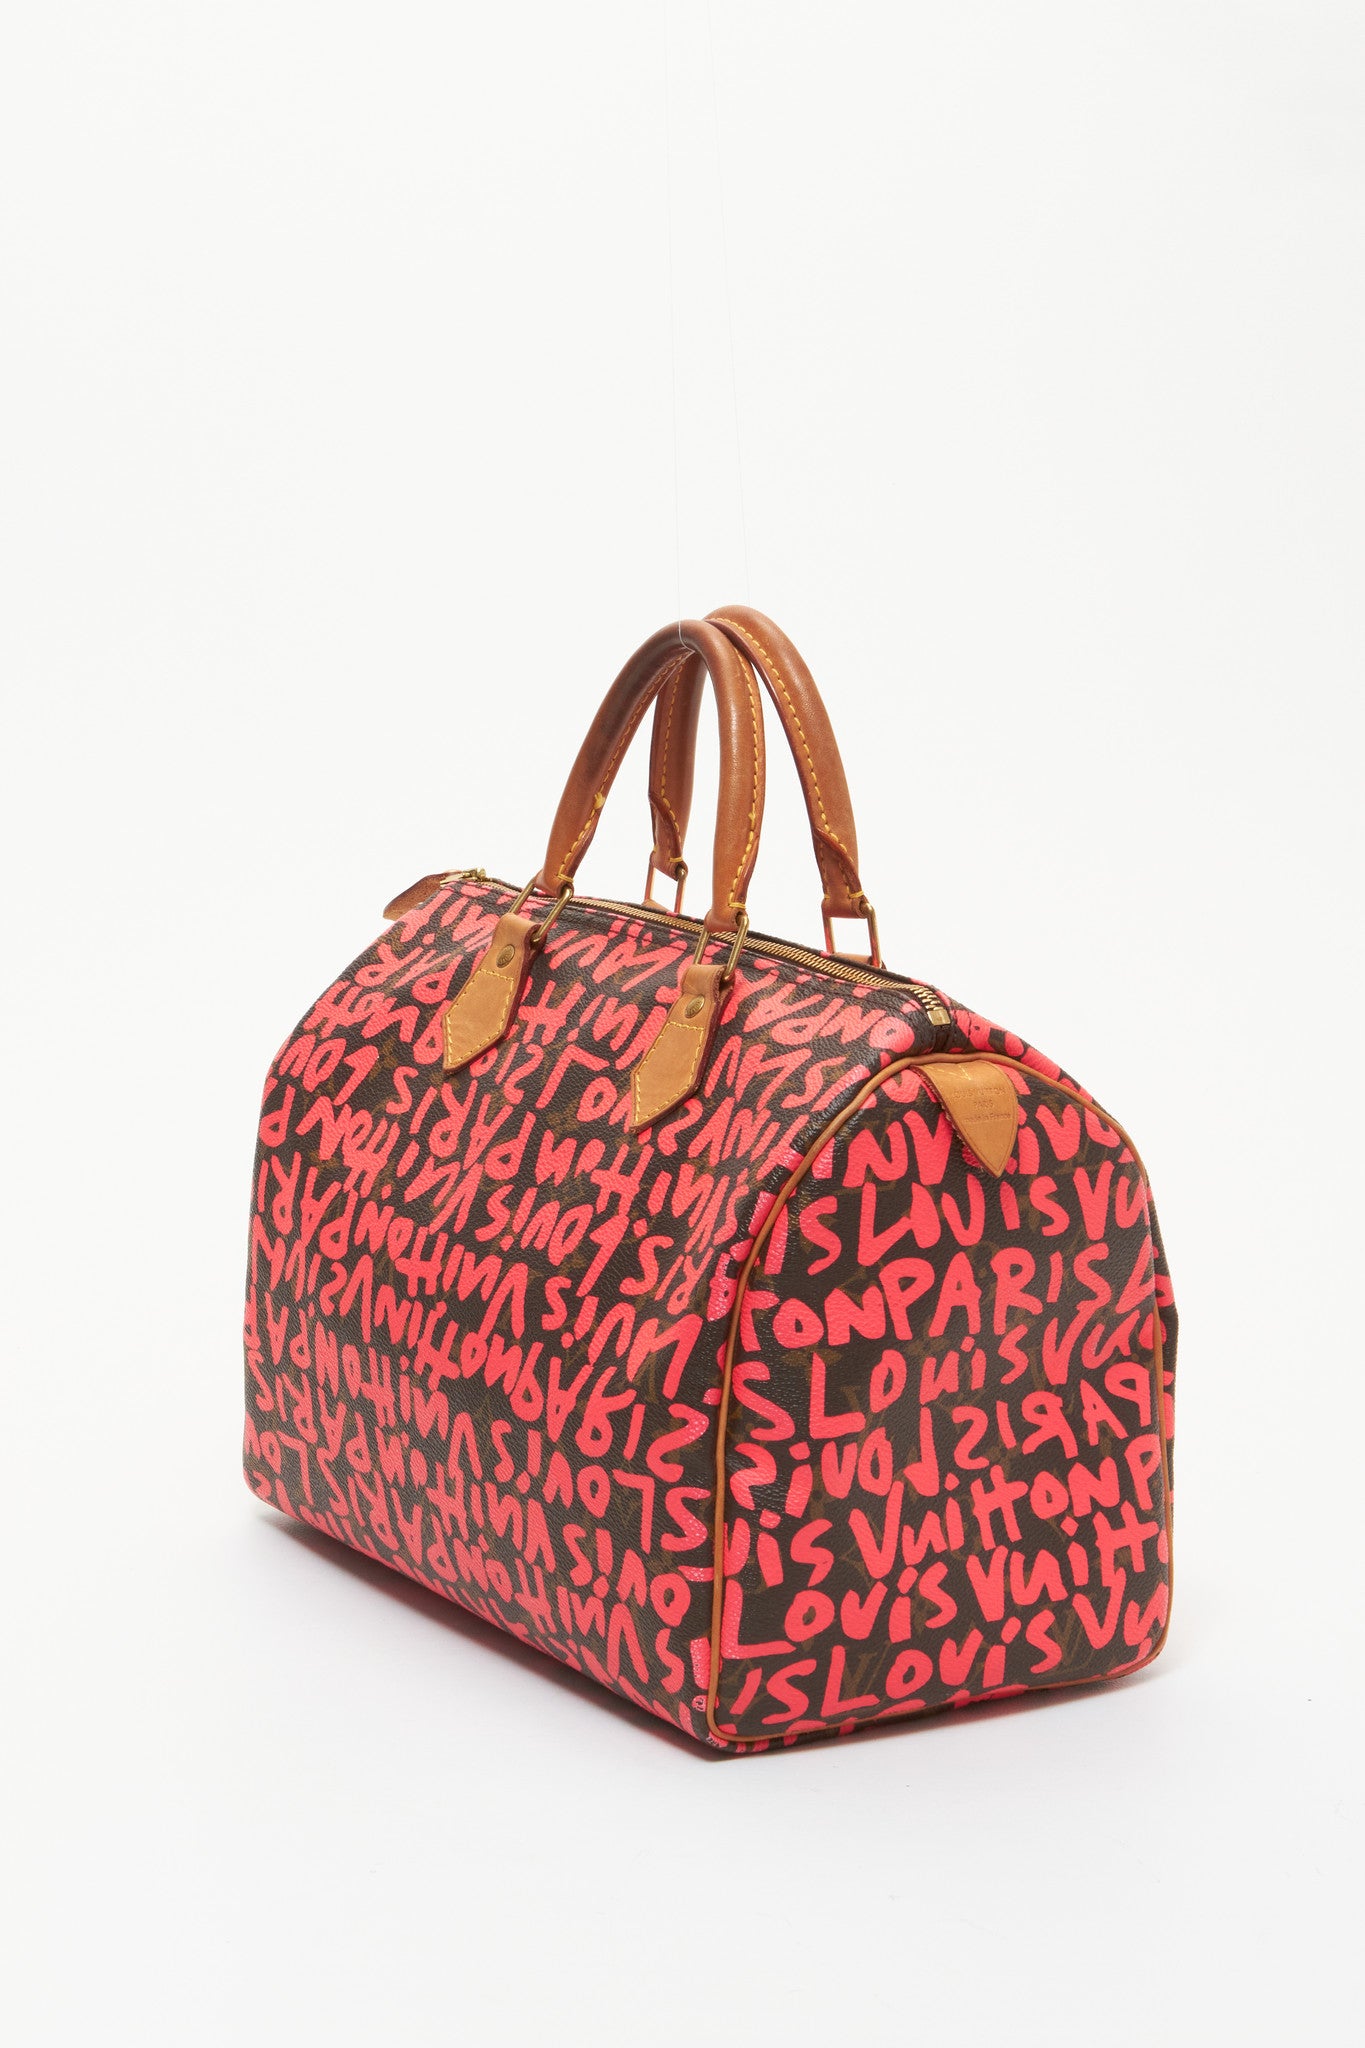 Louis Vuitton Monogram Pink Stephen Sprouse Graffiti Speedy 30